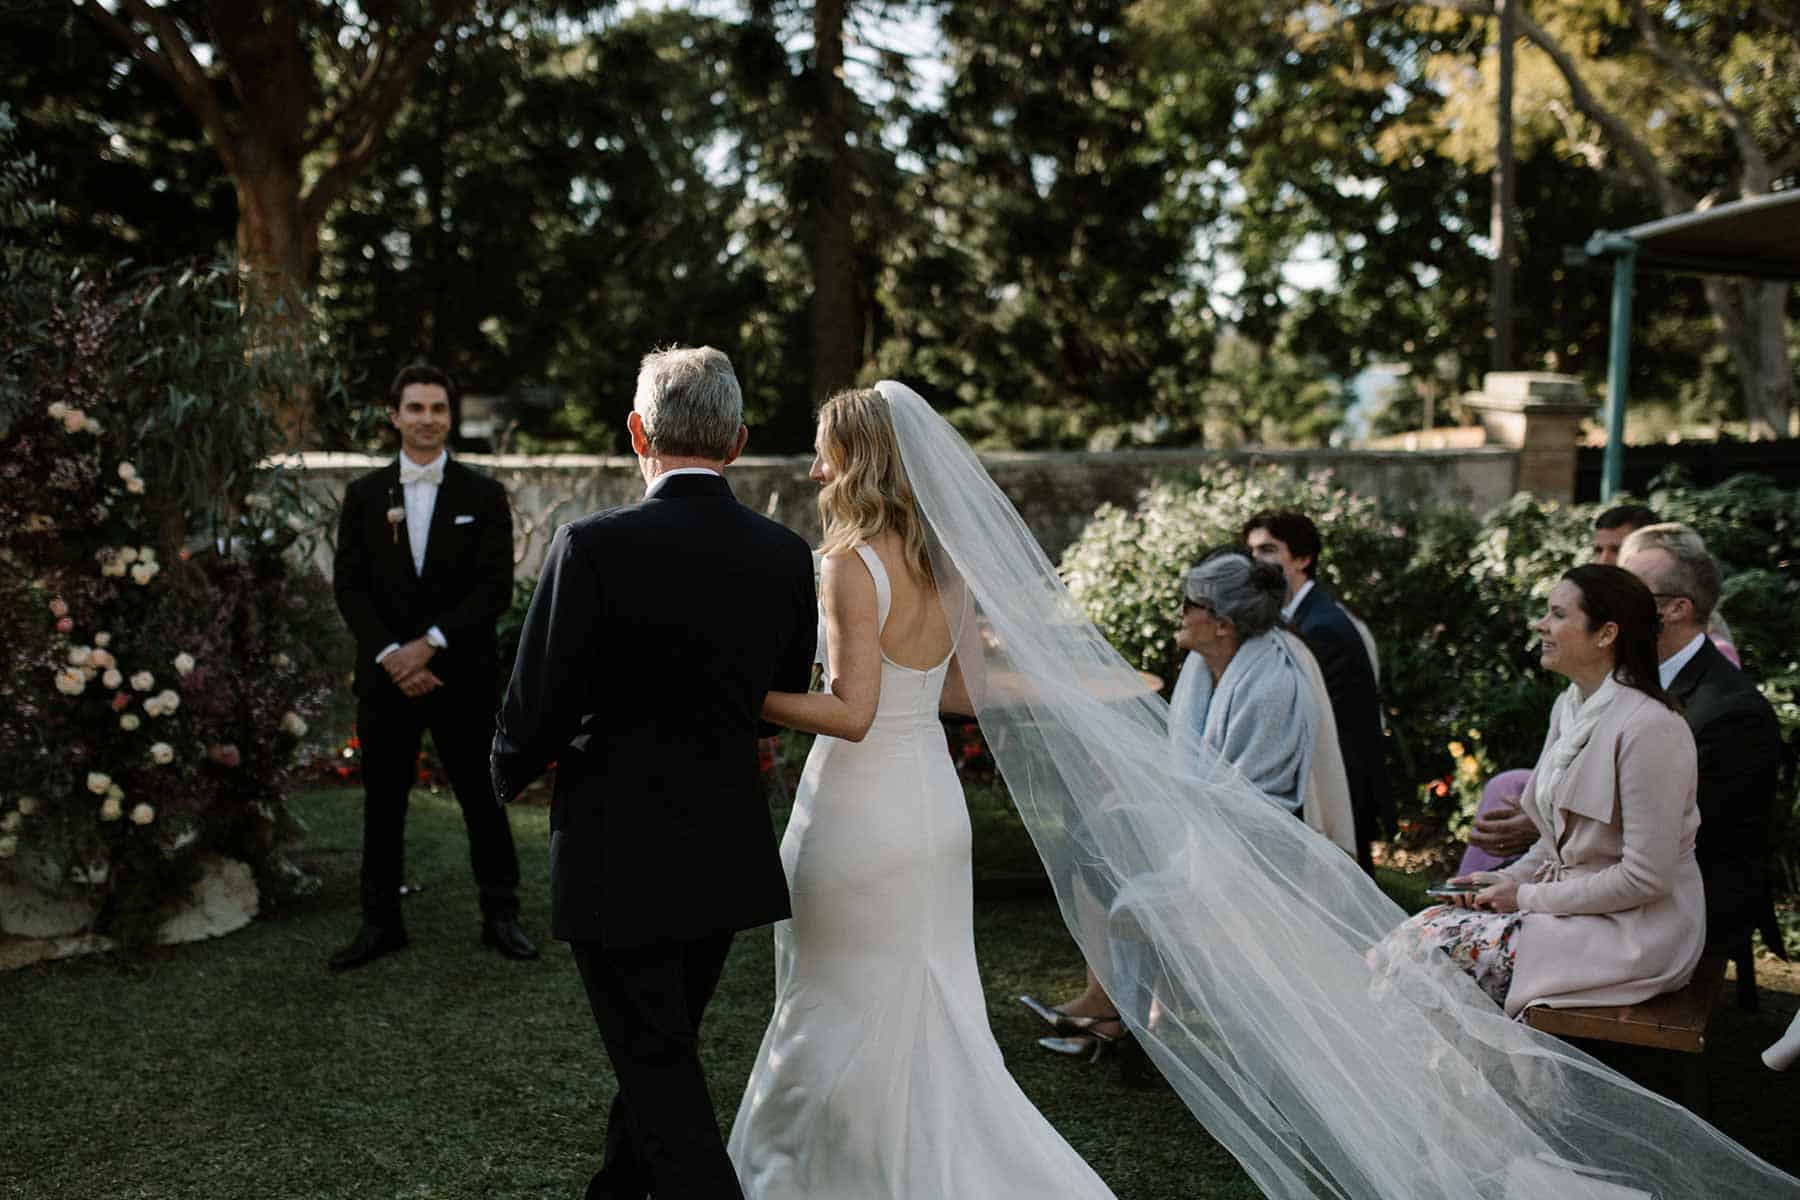 Sydney wedding at Royal Botanic Garden / photography by Damien Milan